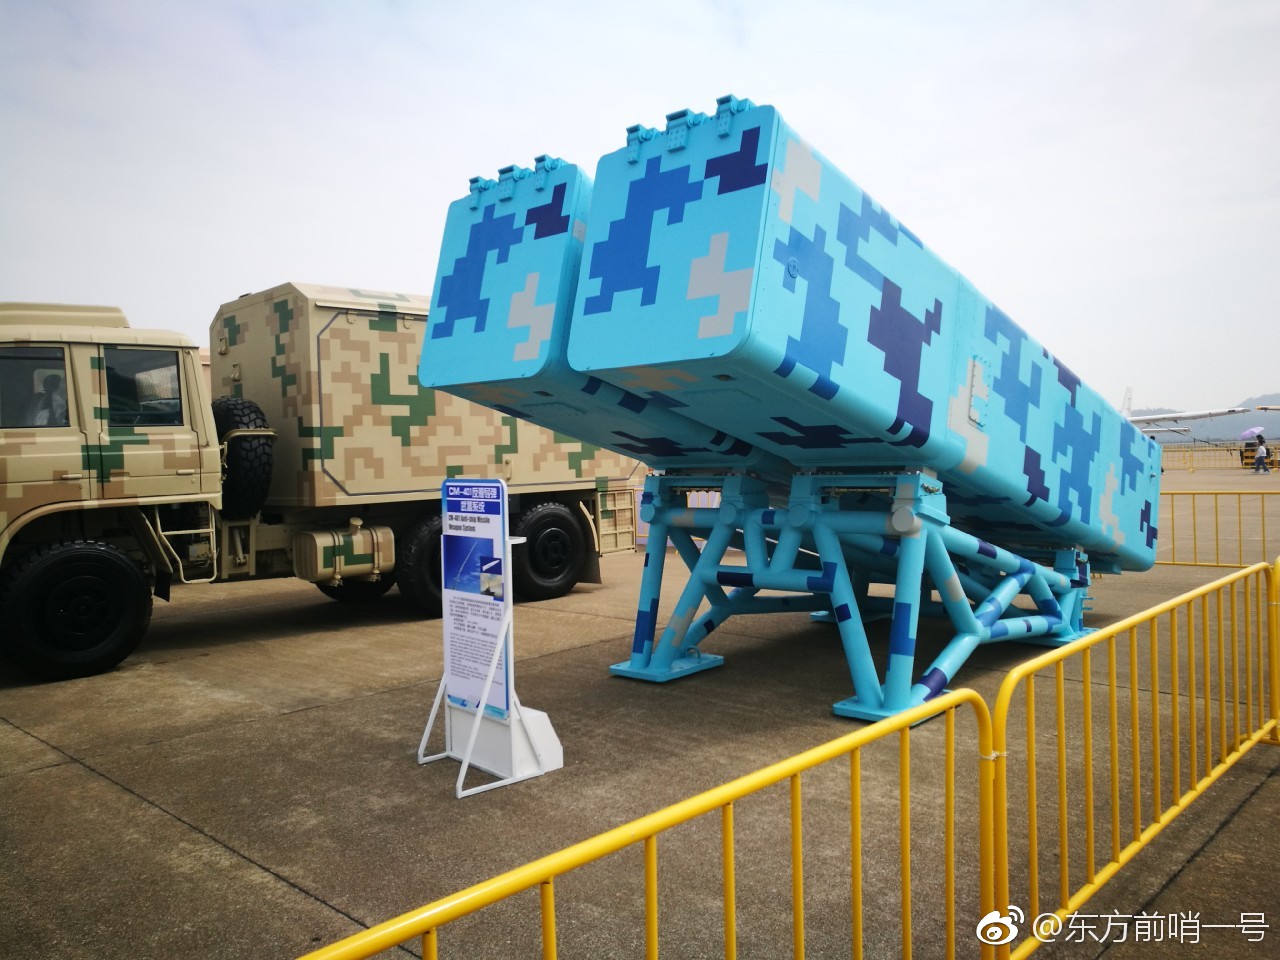 2018-11-05-CM-401-la-Chine-exporte-ses-missiles-balistiques-anti-navires-06.jpg